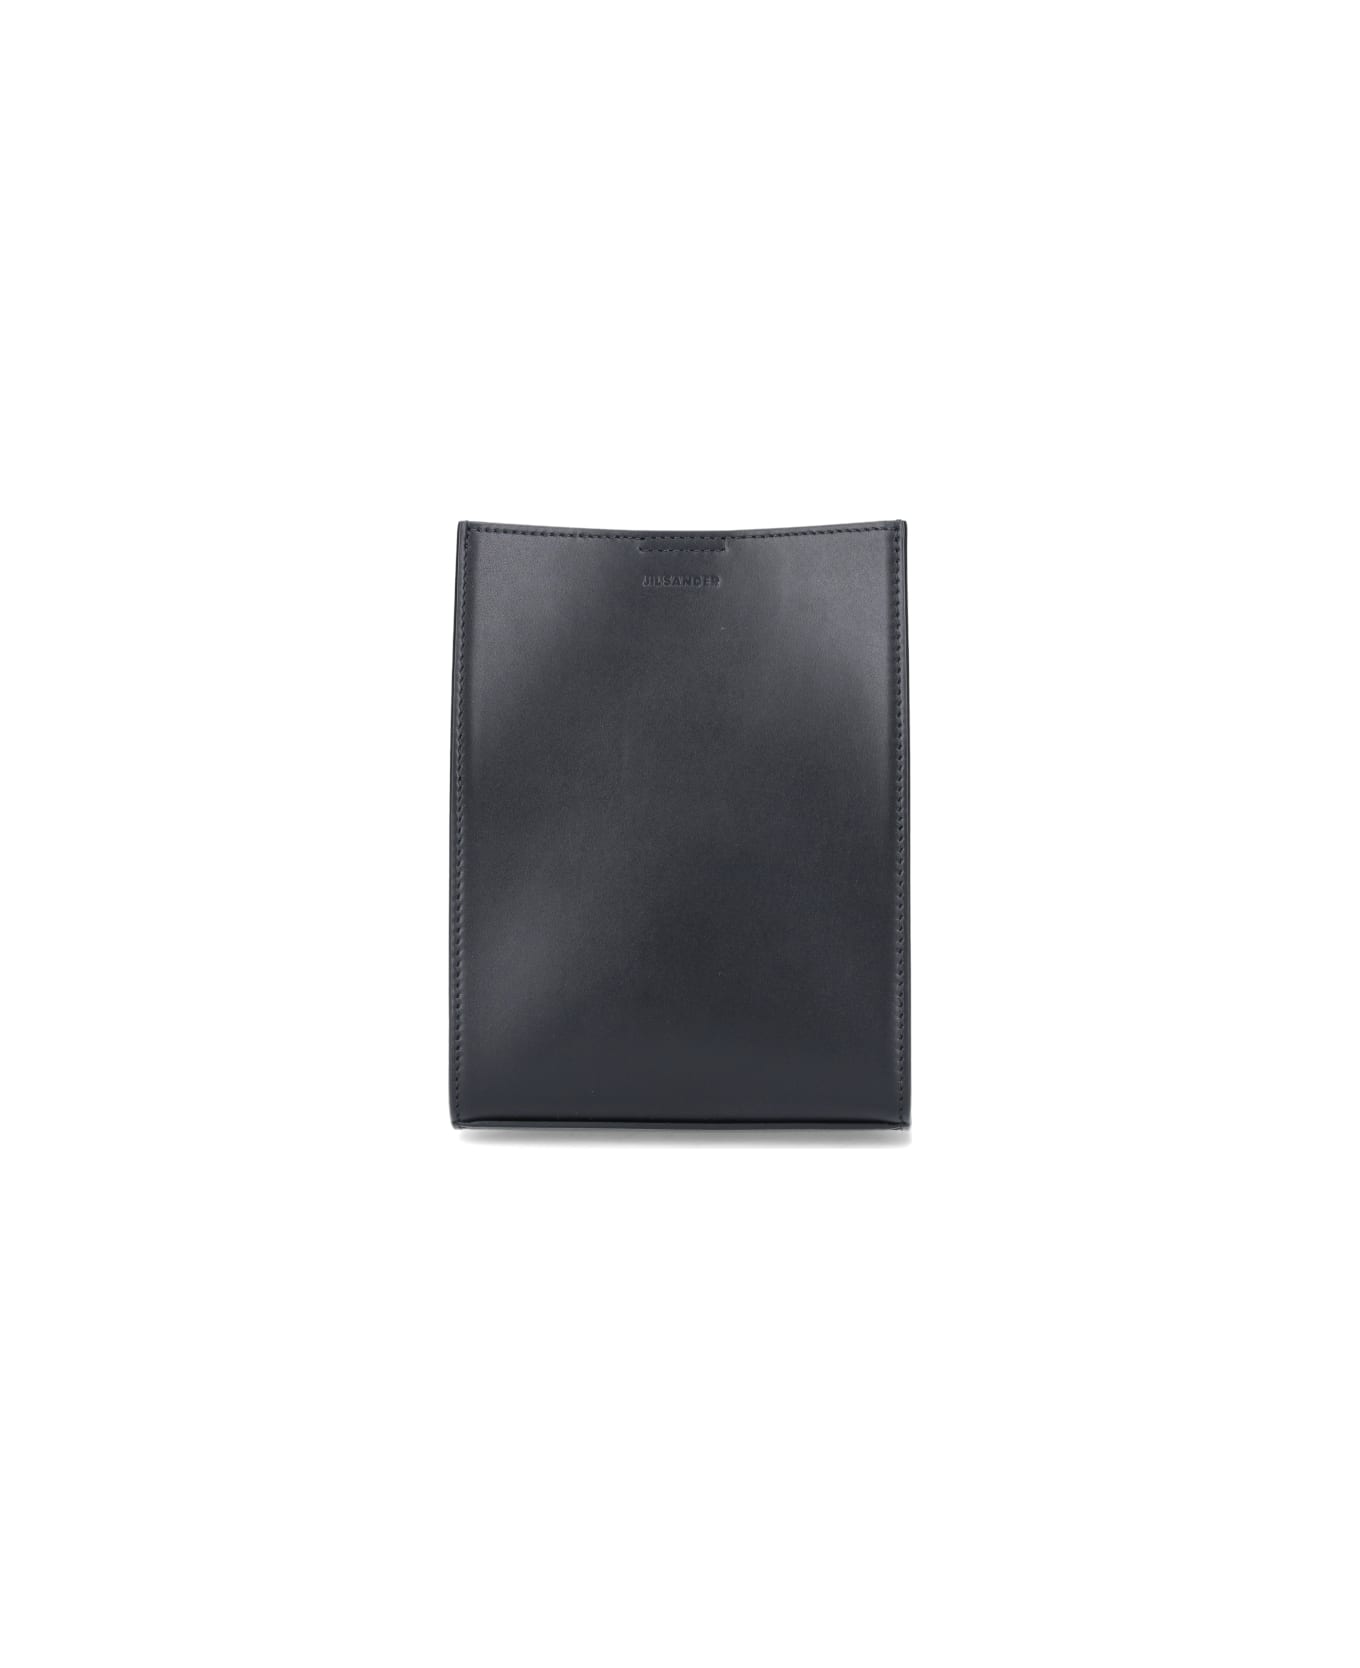 Jil Sander 'tangle' Small Bag - Black  